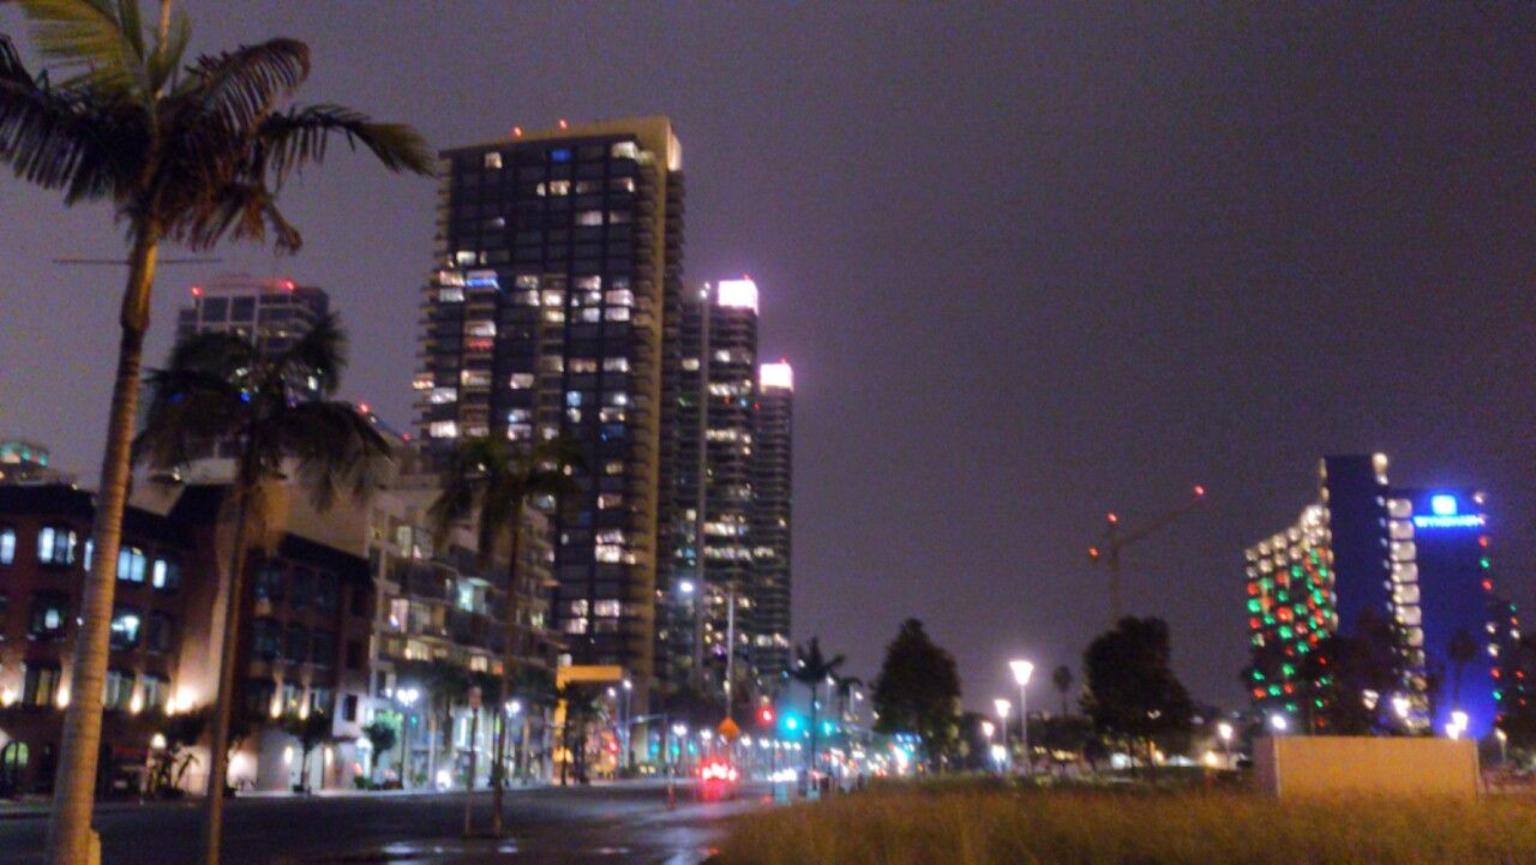 San Diego by night!!